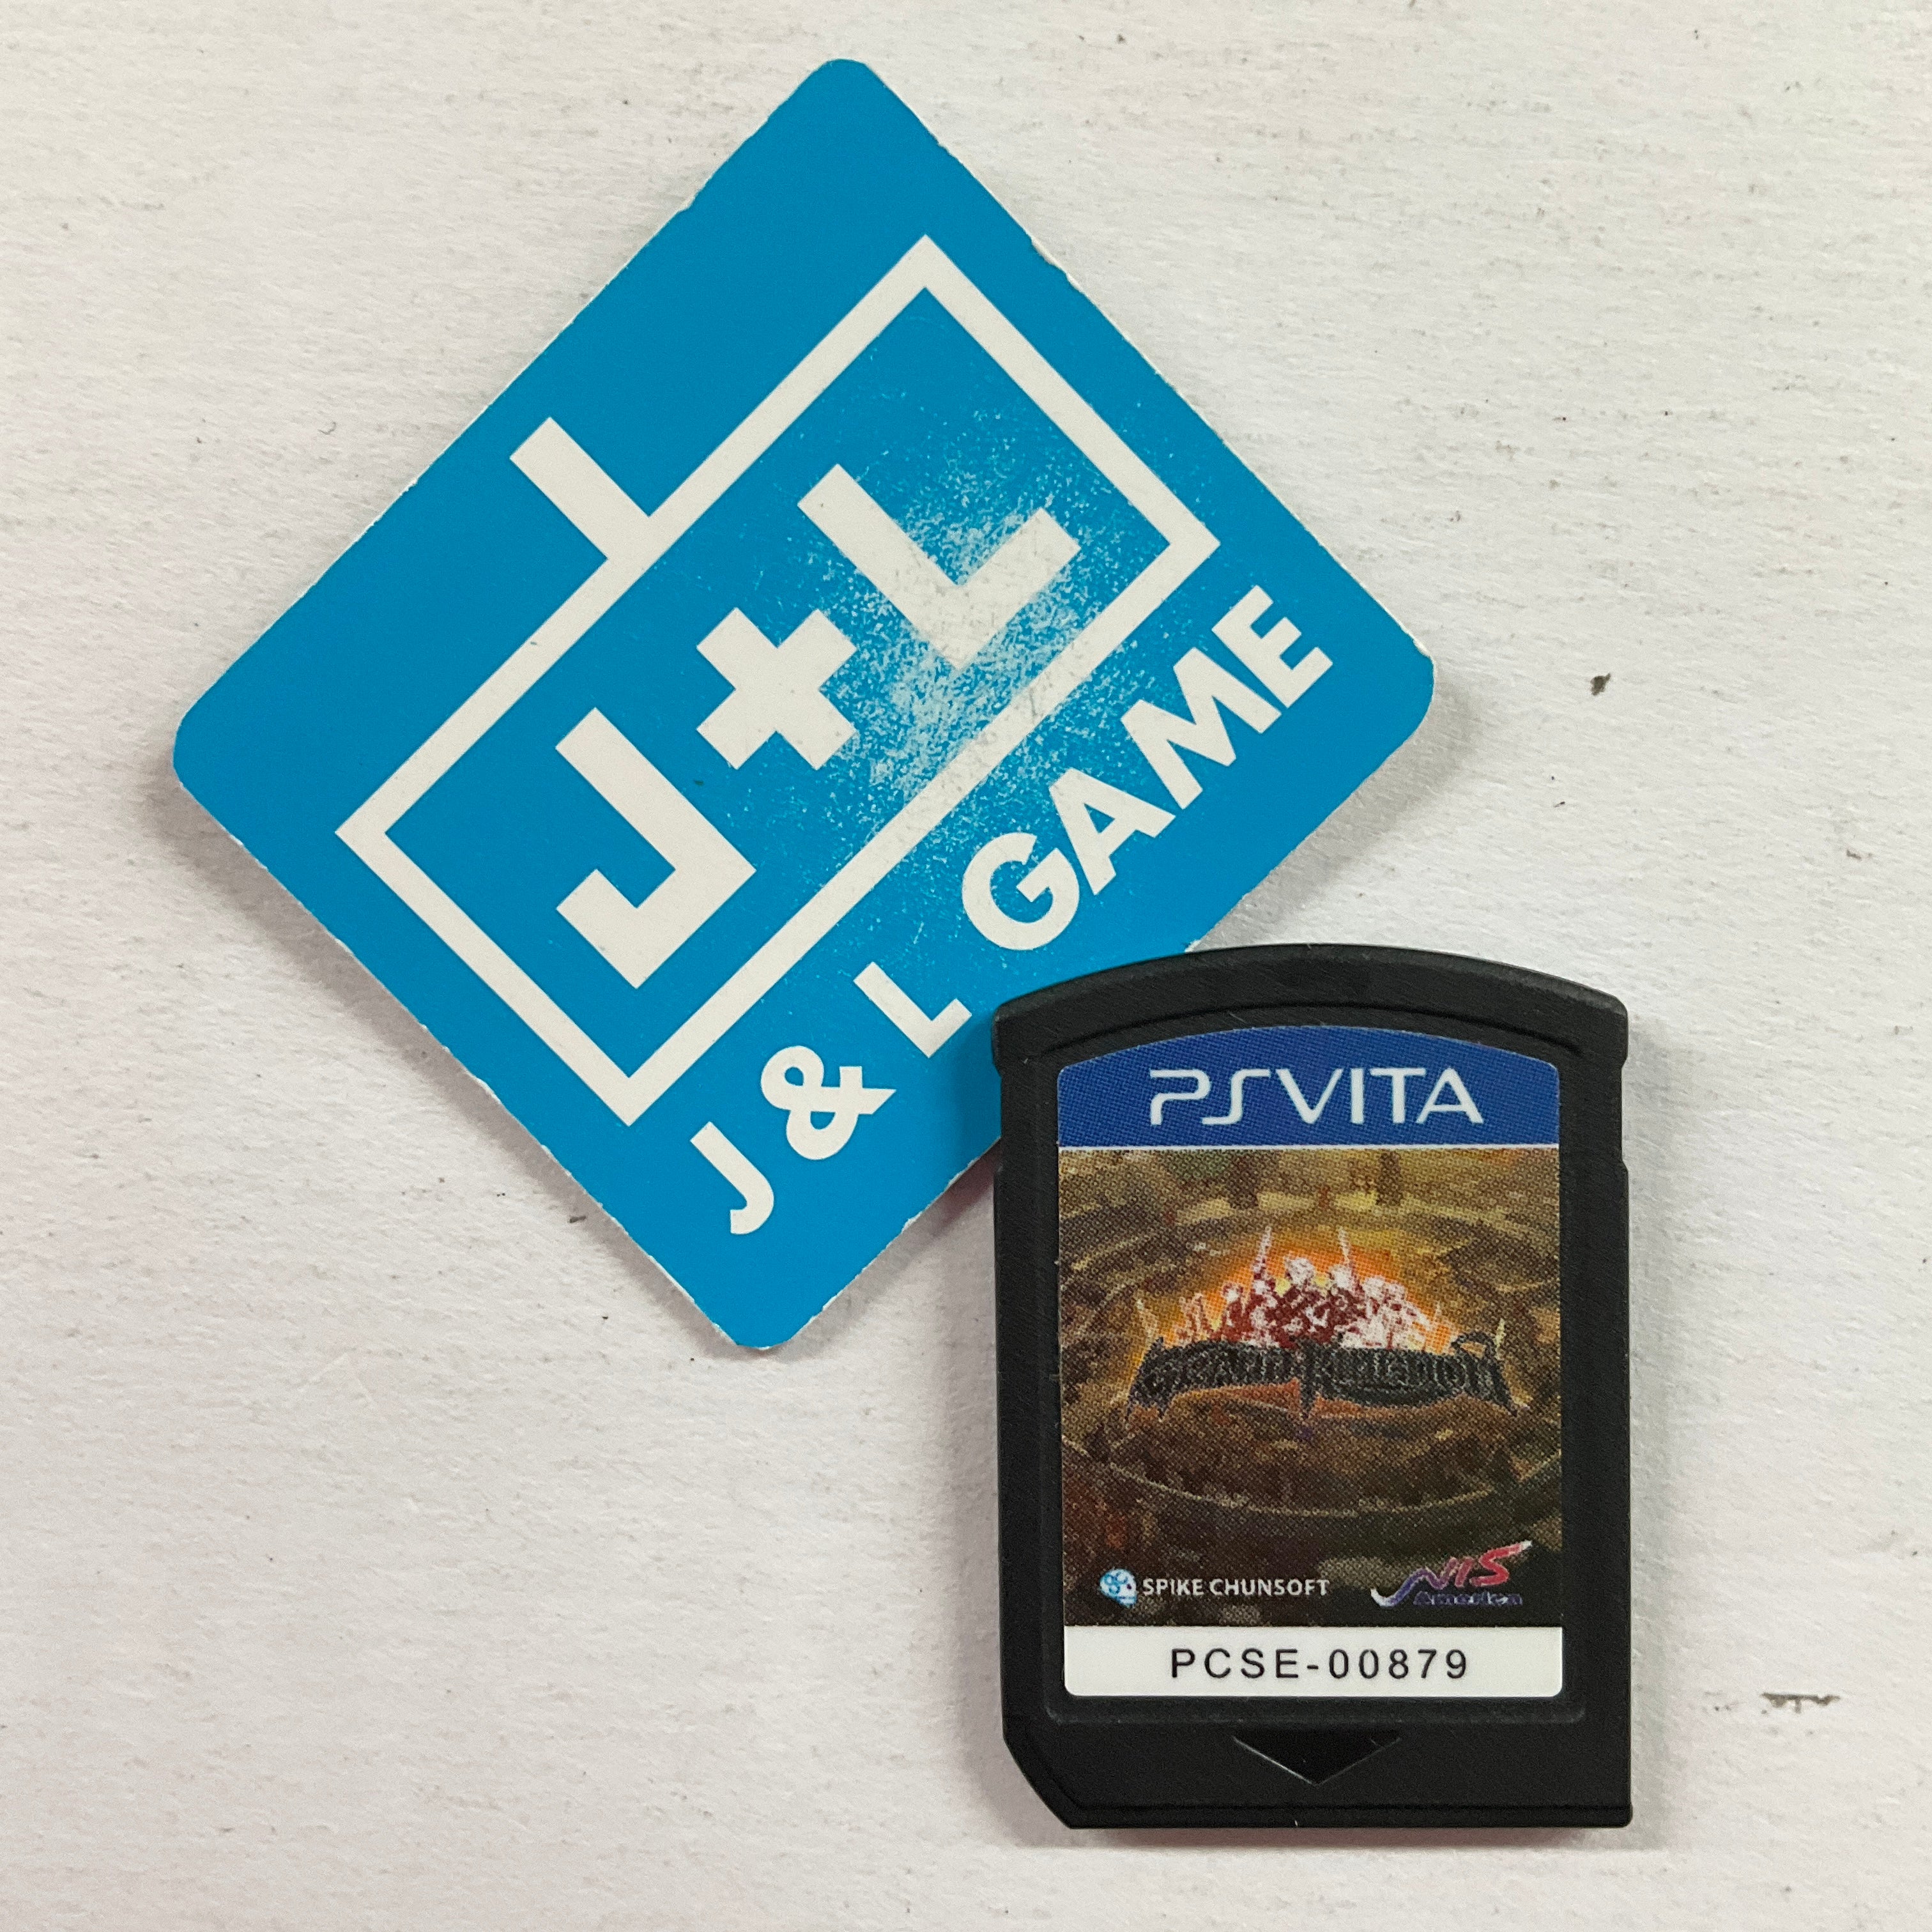 Grand Kingdom - (PSV) PS Vita [Pre-Owned] Video Games NIS America   